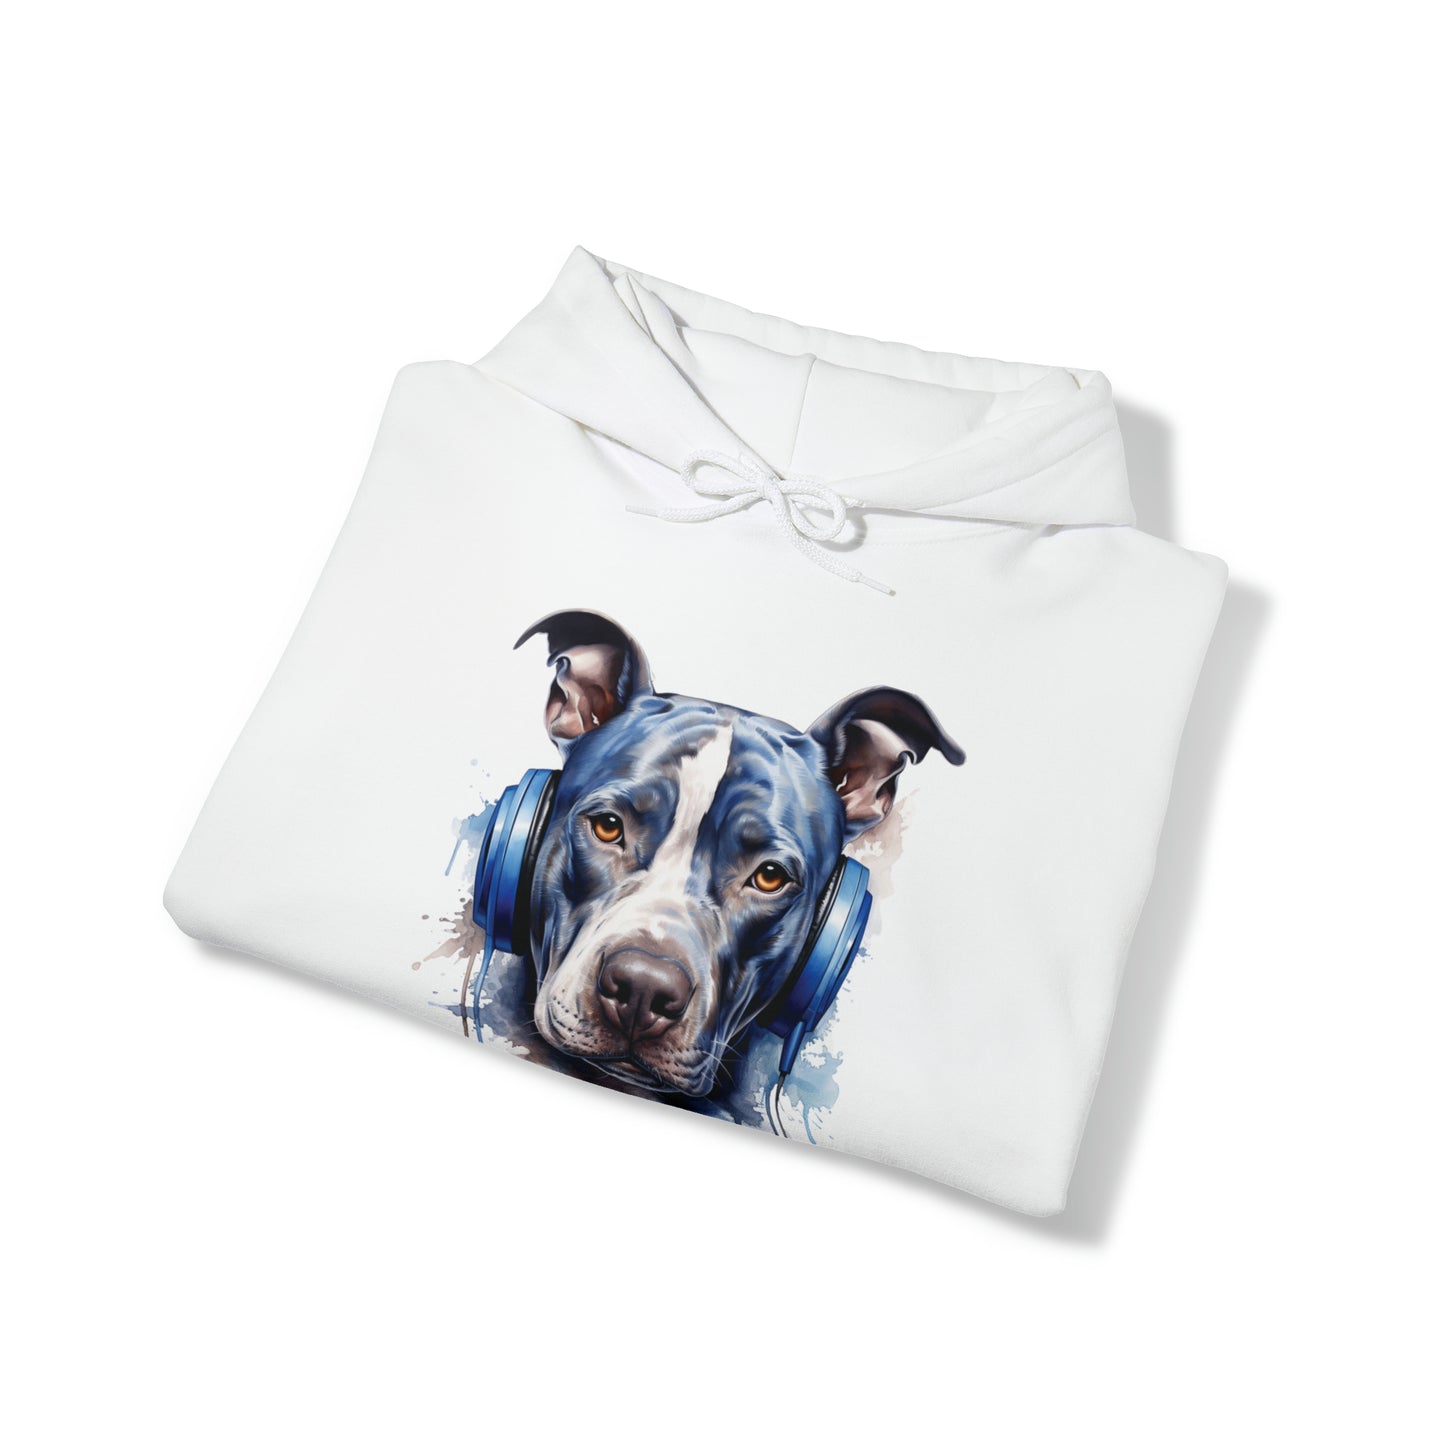 Blue Nose Pitbull Headphones | Unisex Heavy Blend™ Hooded Sweatshirt